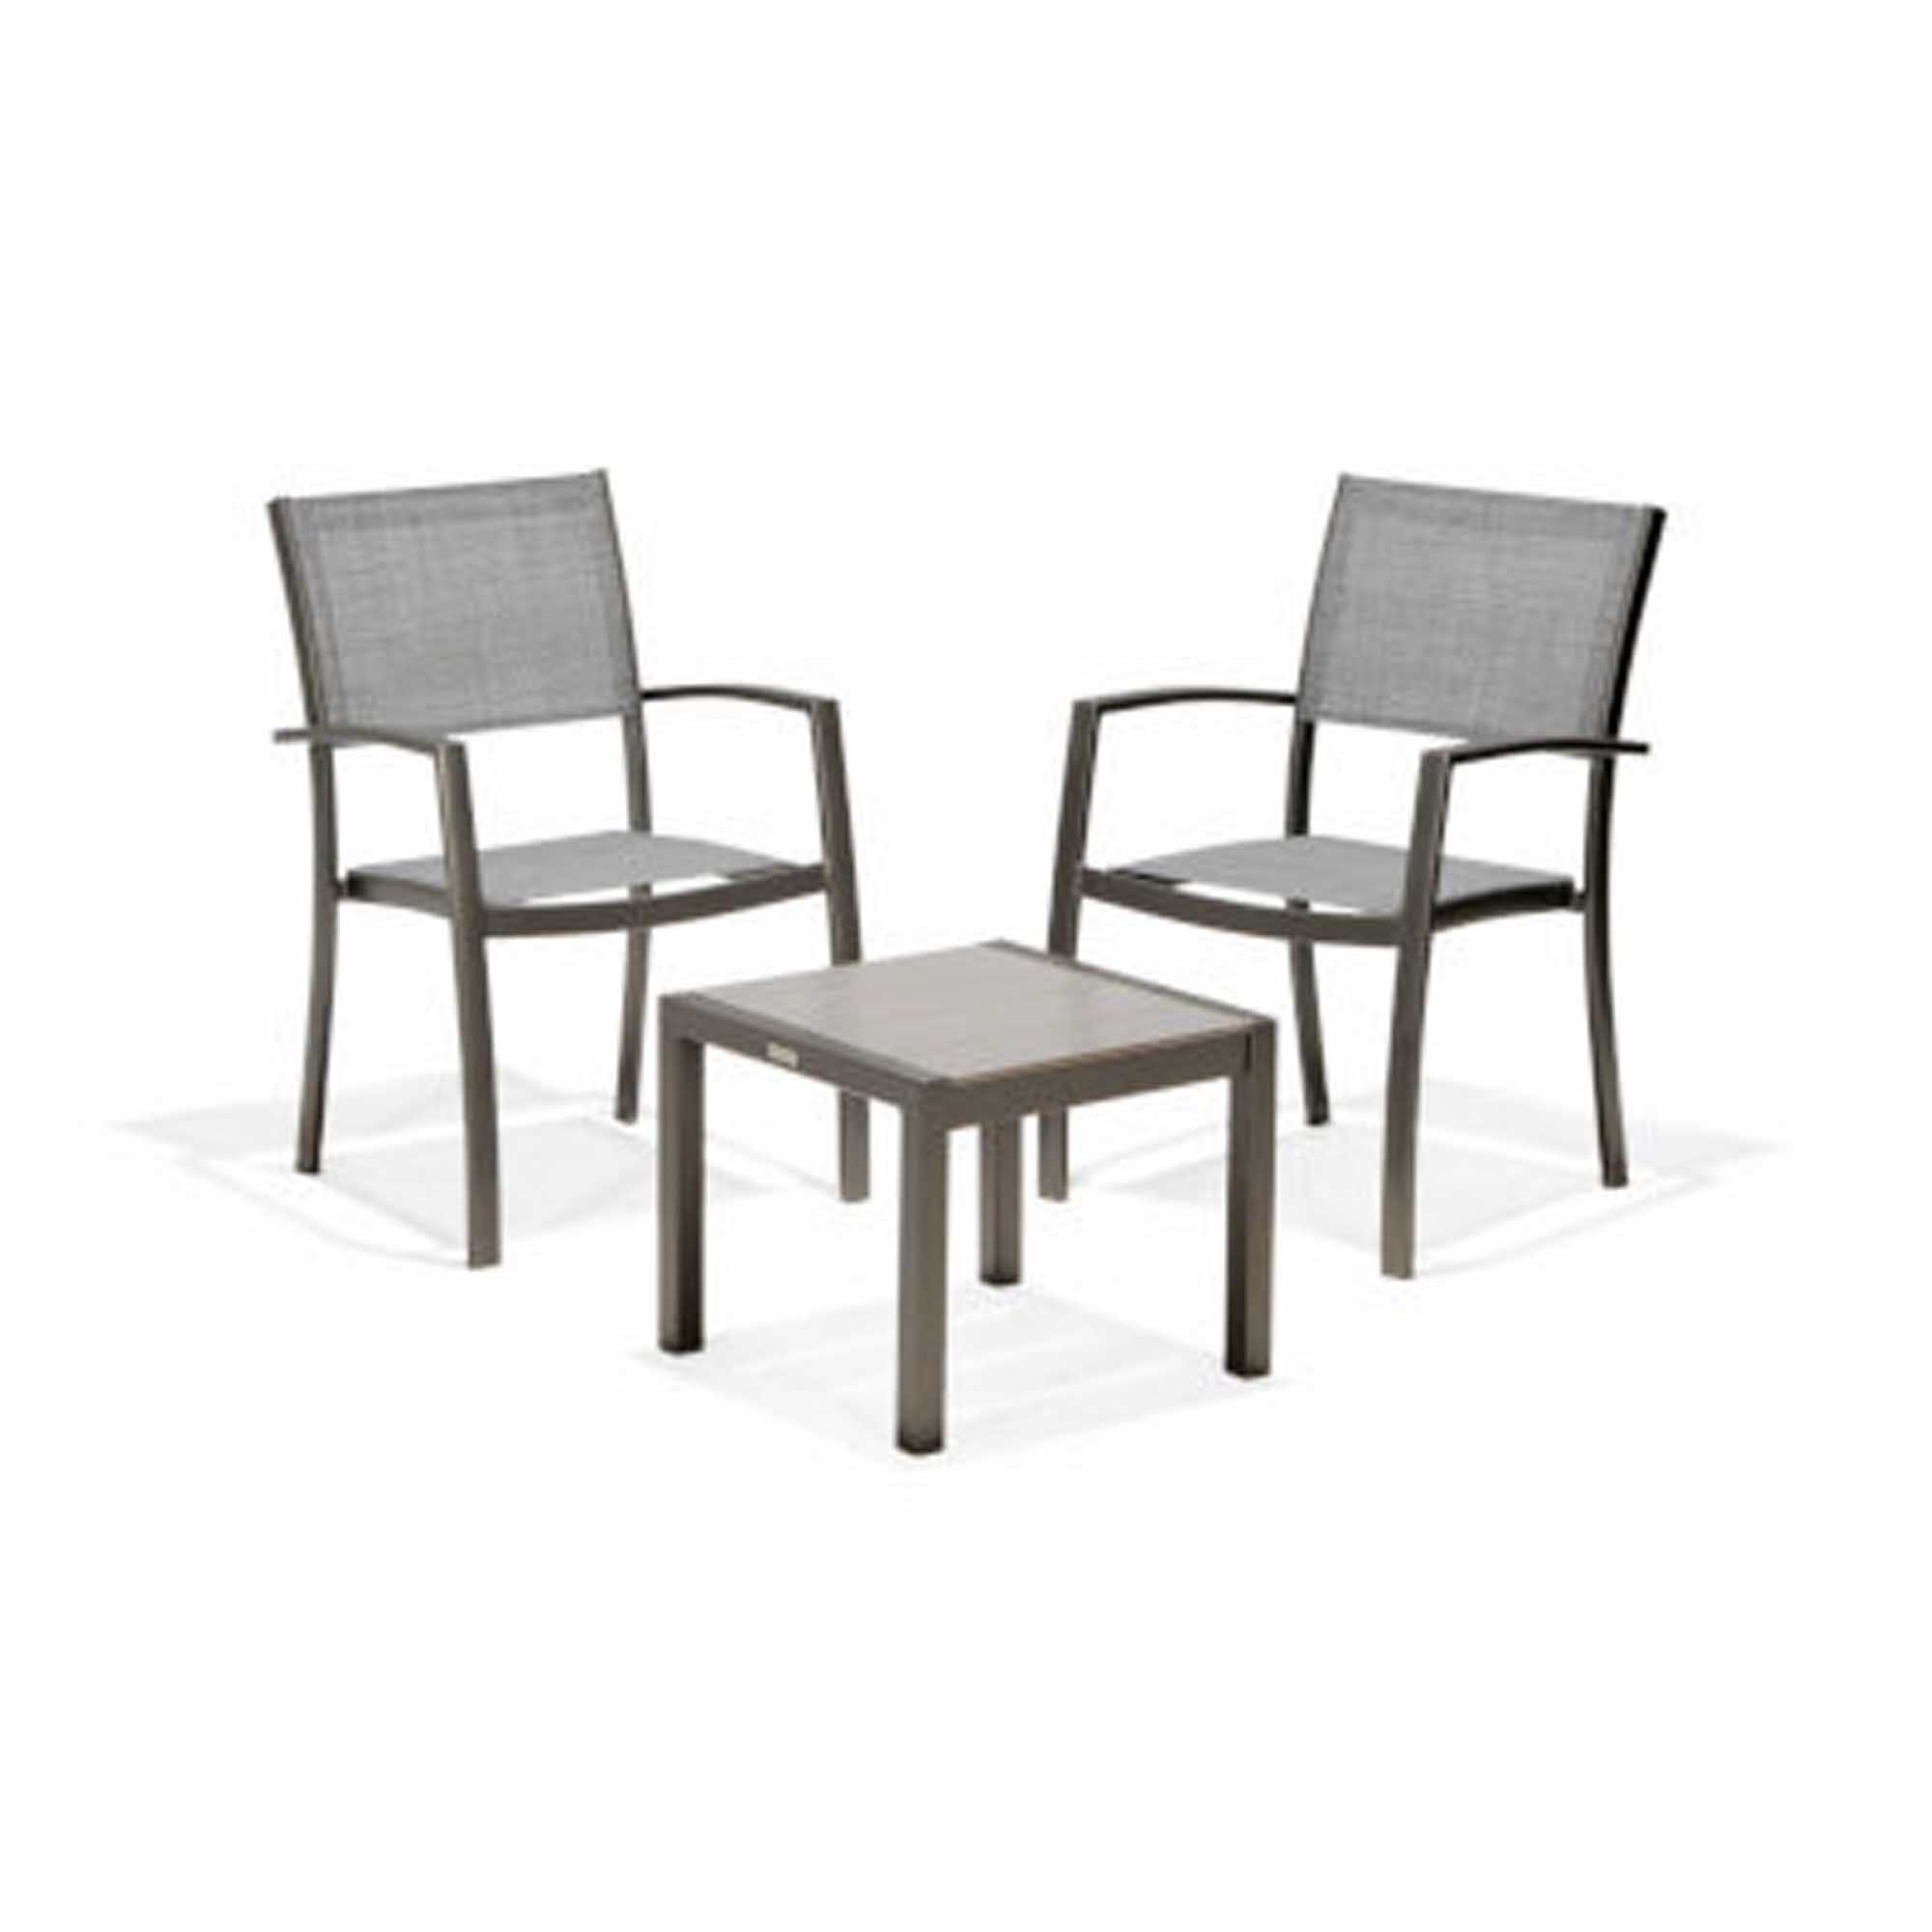 Lifestyle Garden Solana kafésett Grå/grå 2 stoler med armlener & bord 50x50 cm